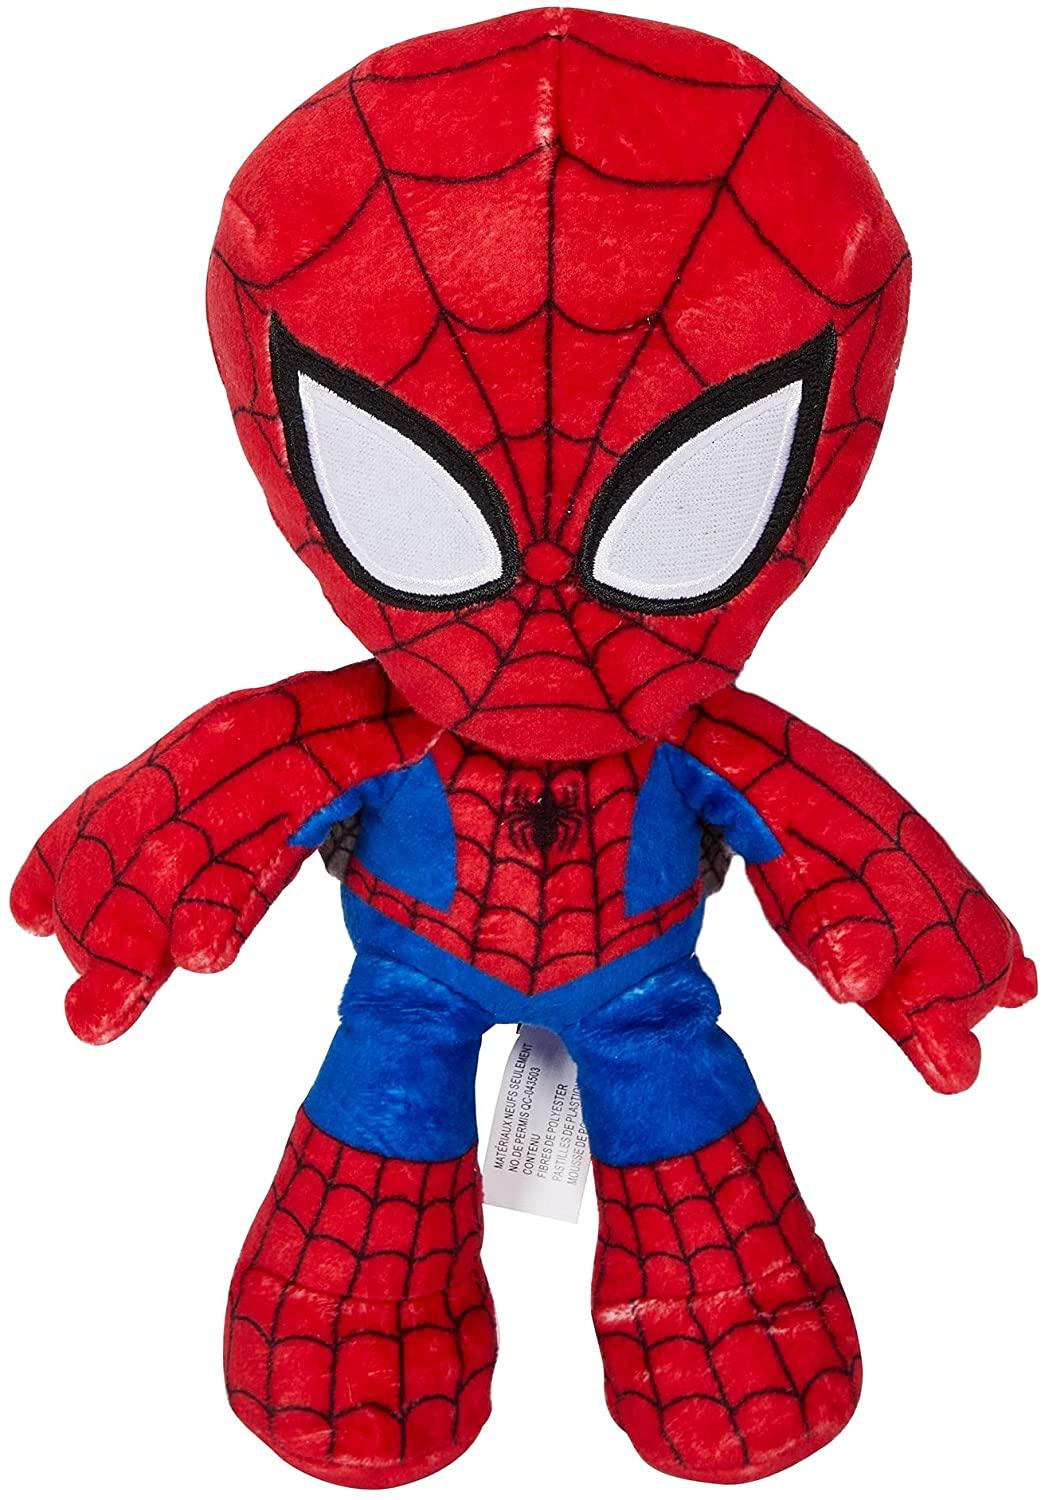 Spiderman Plush 8